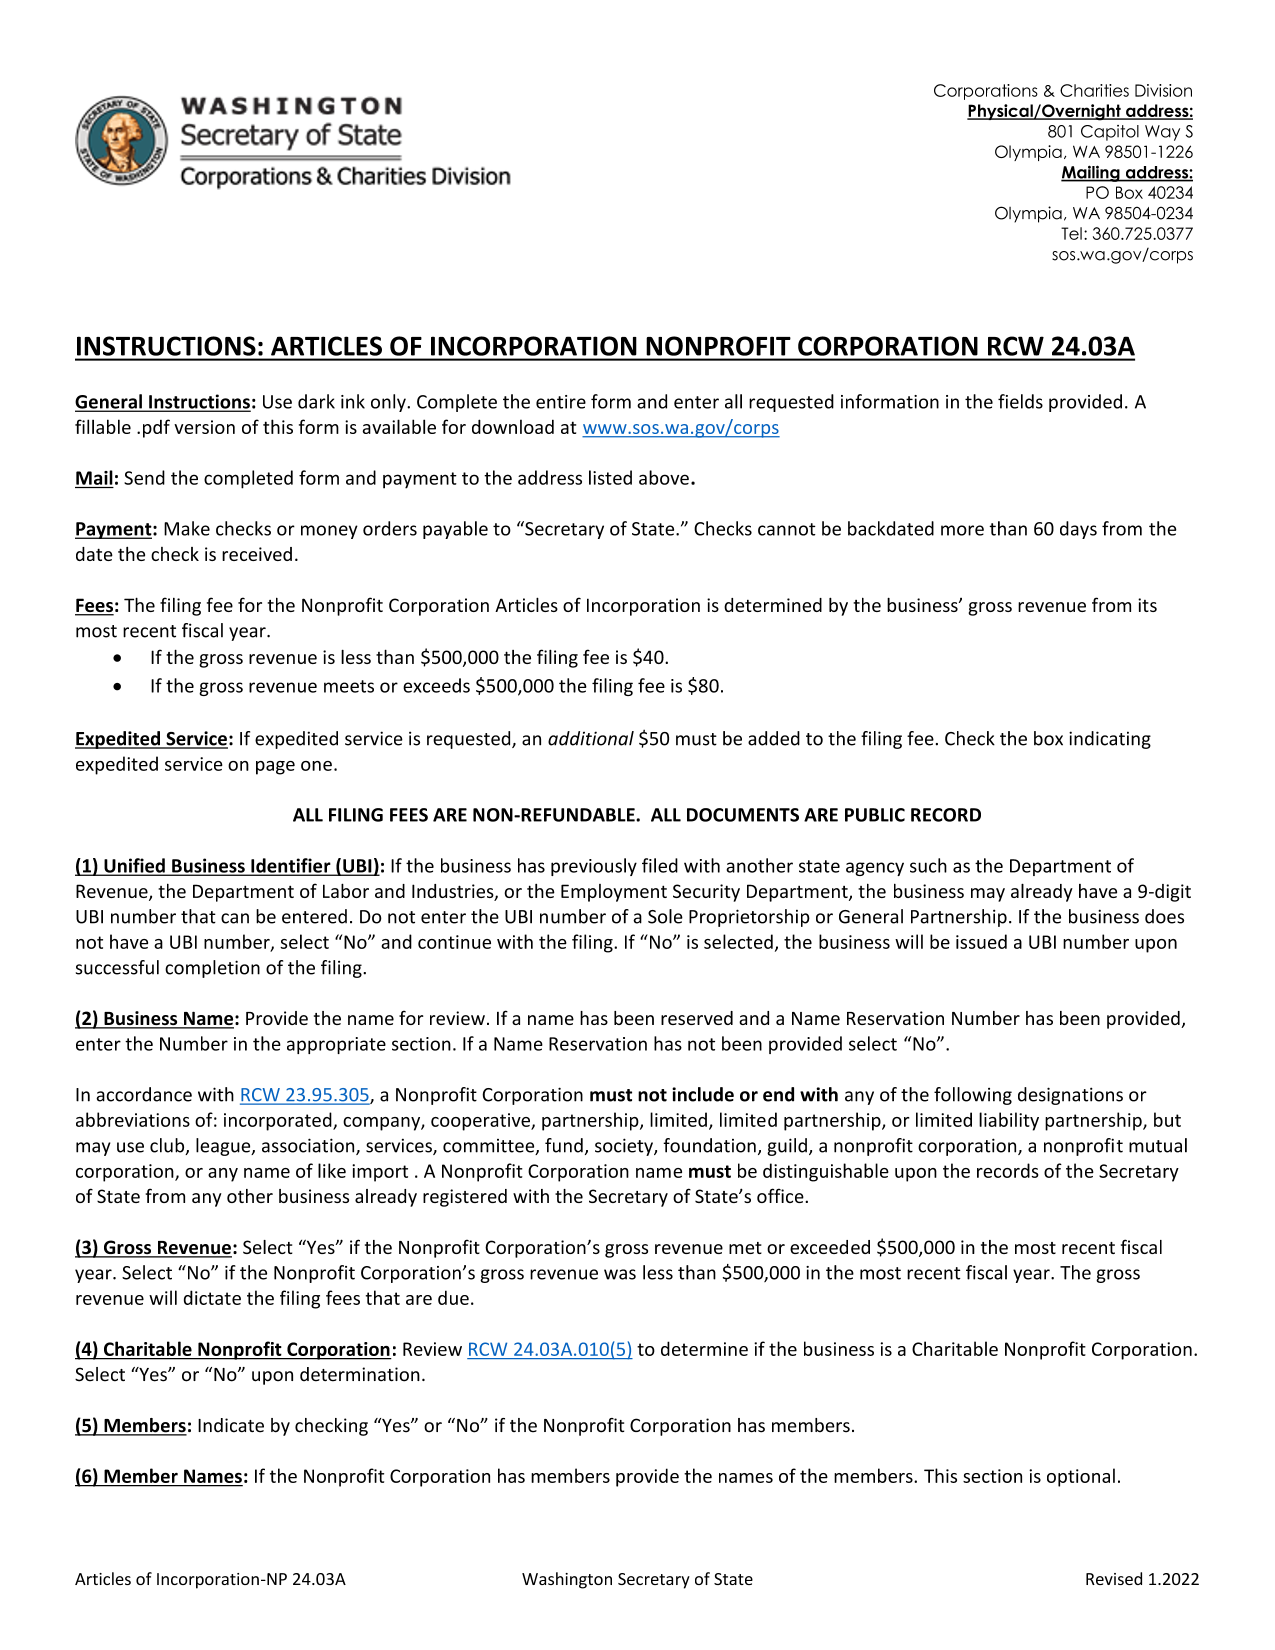 Articles of Incorporation Washington Nonprofit Corporation